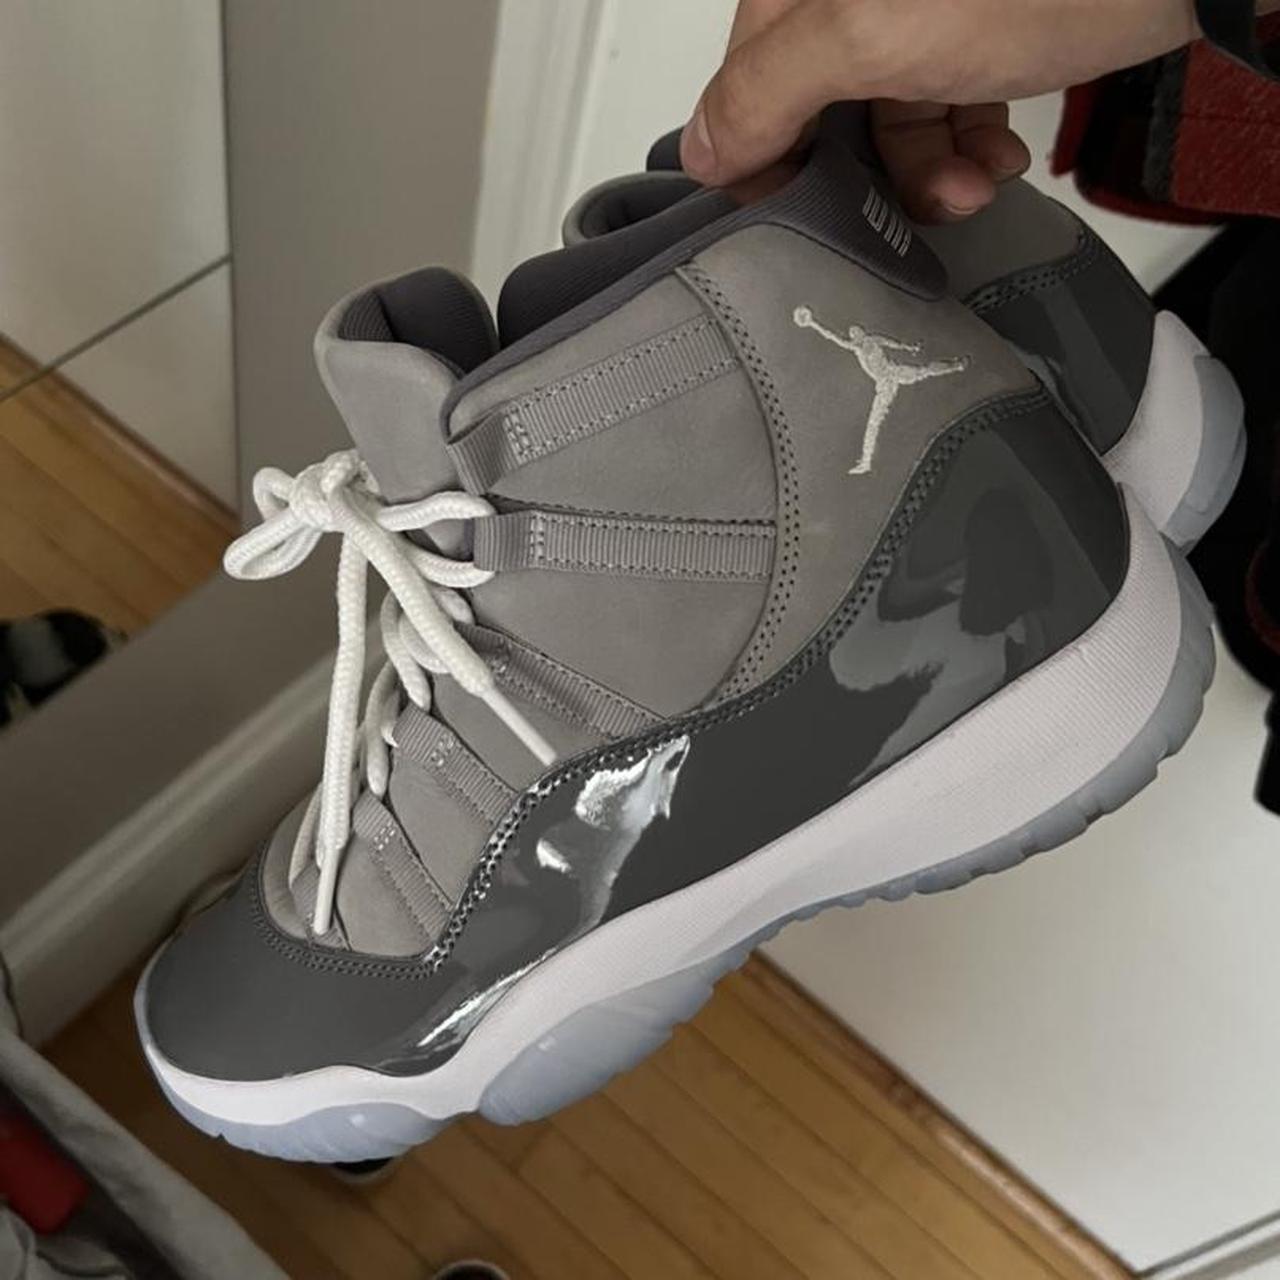 Jordan 11 cool grey worn once size 10 - Depop